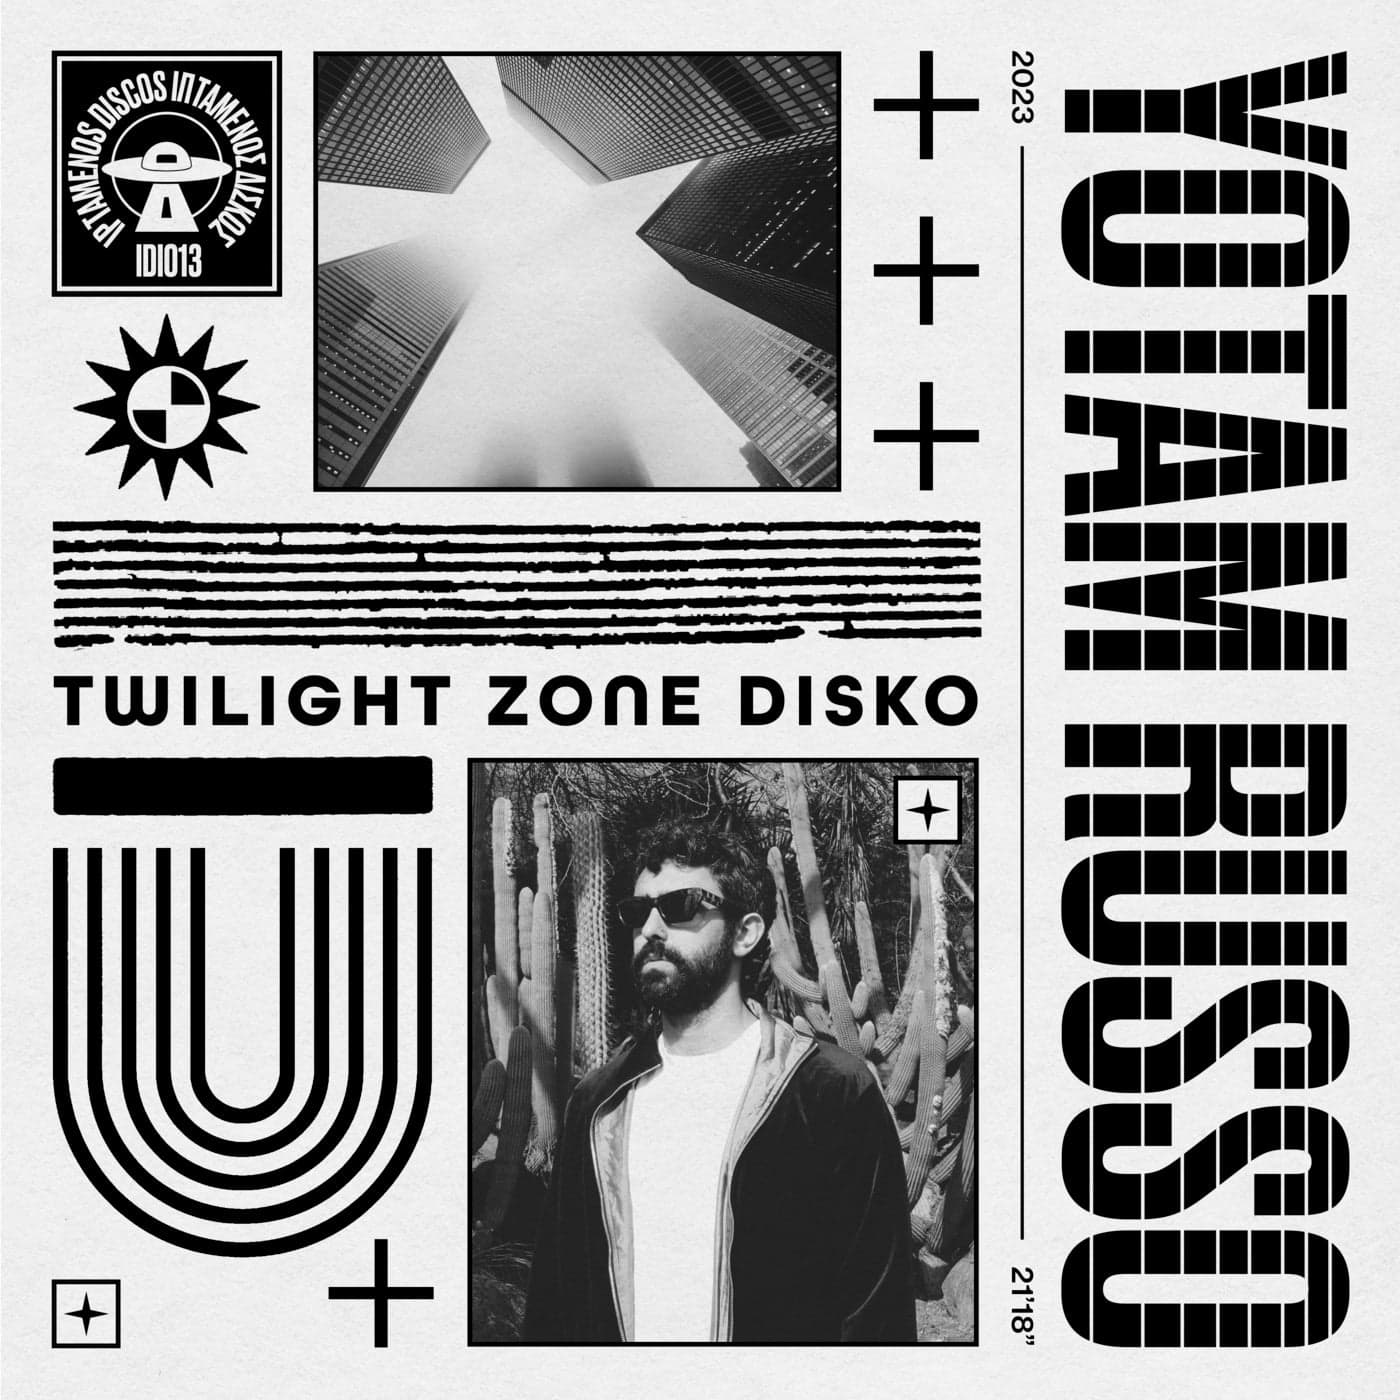 Download Lott, Yotam Russo - Twilight Zone Disko on Electrobuzz